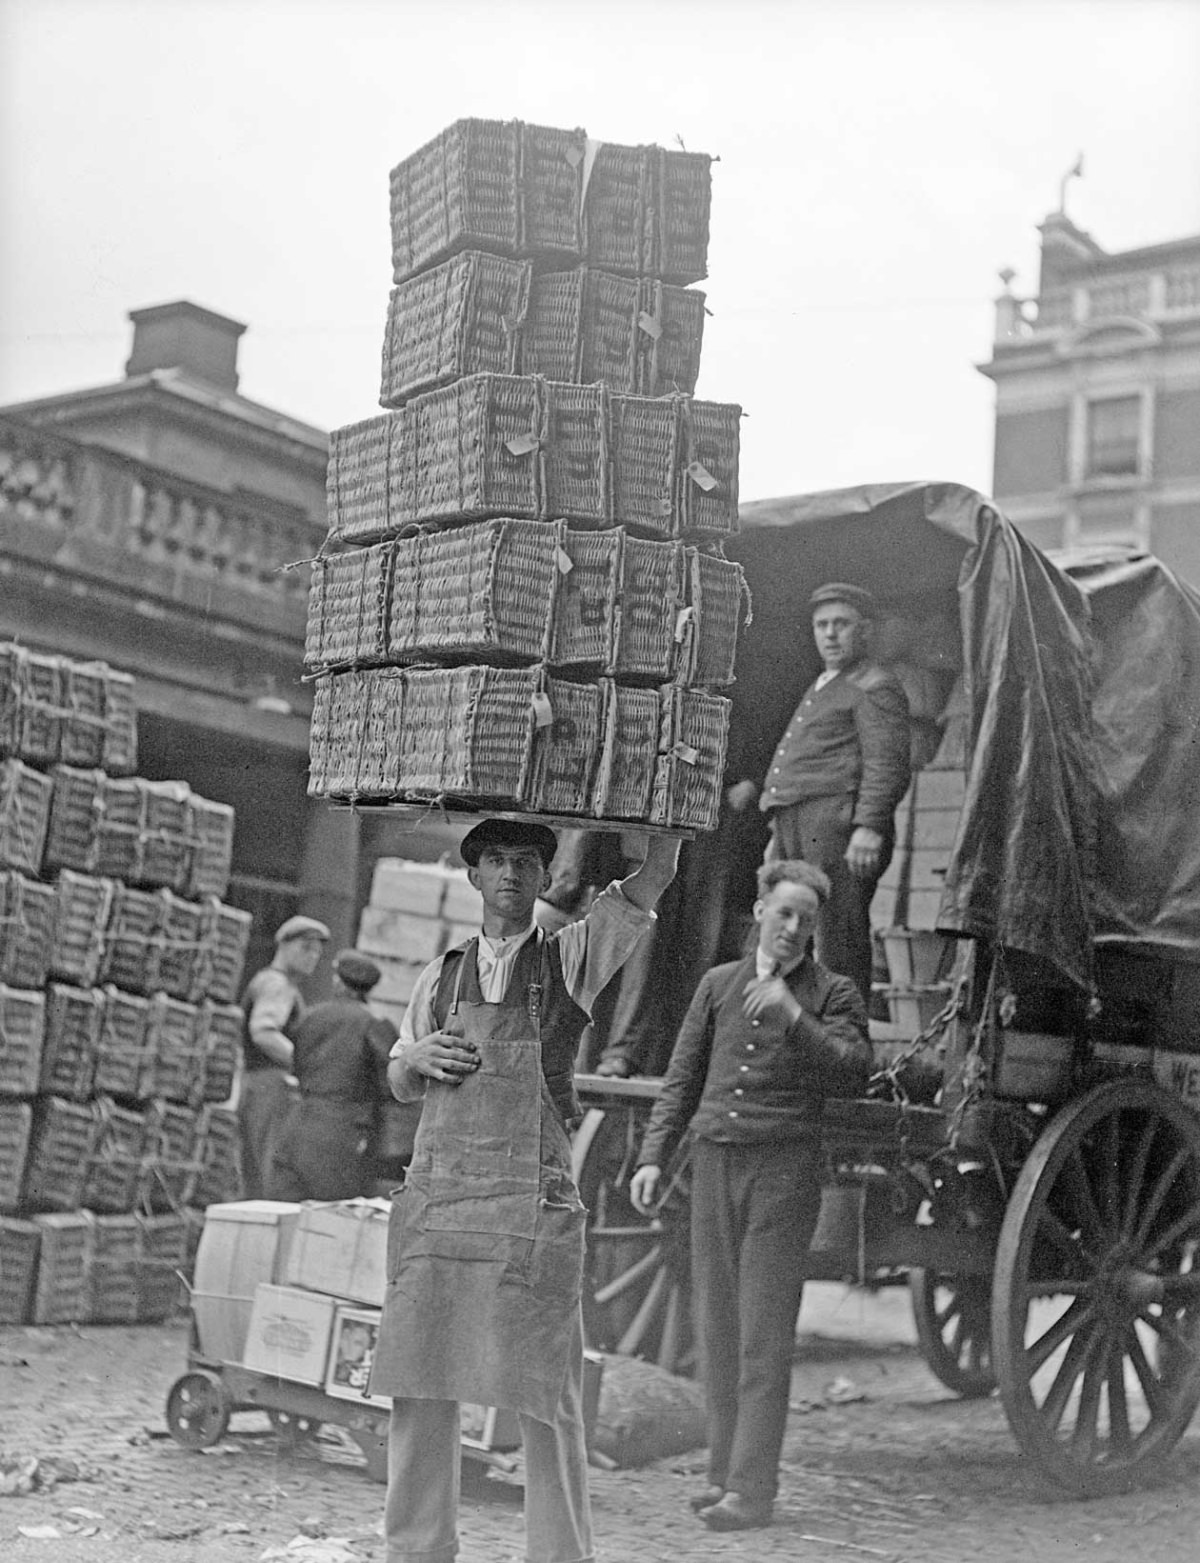 Transporting market baskets, 1930.